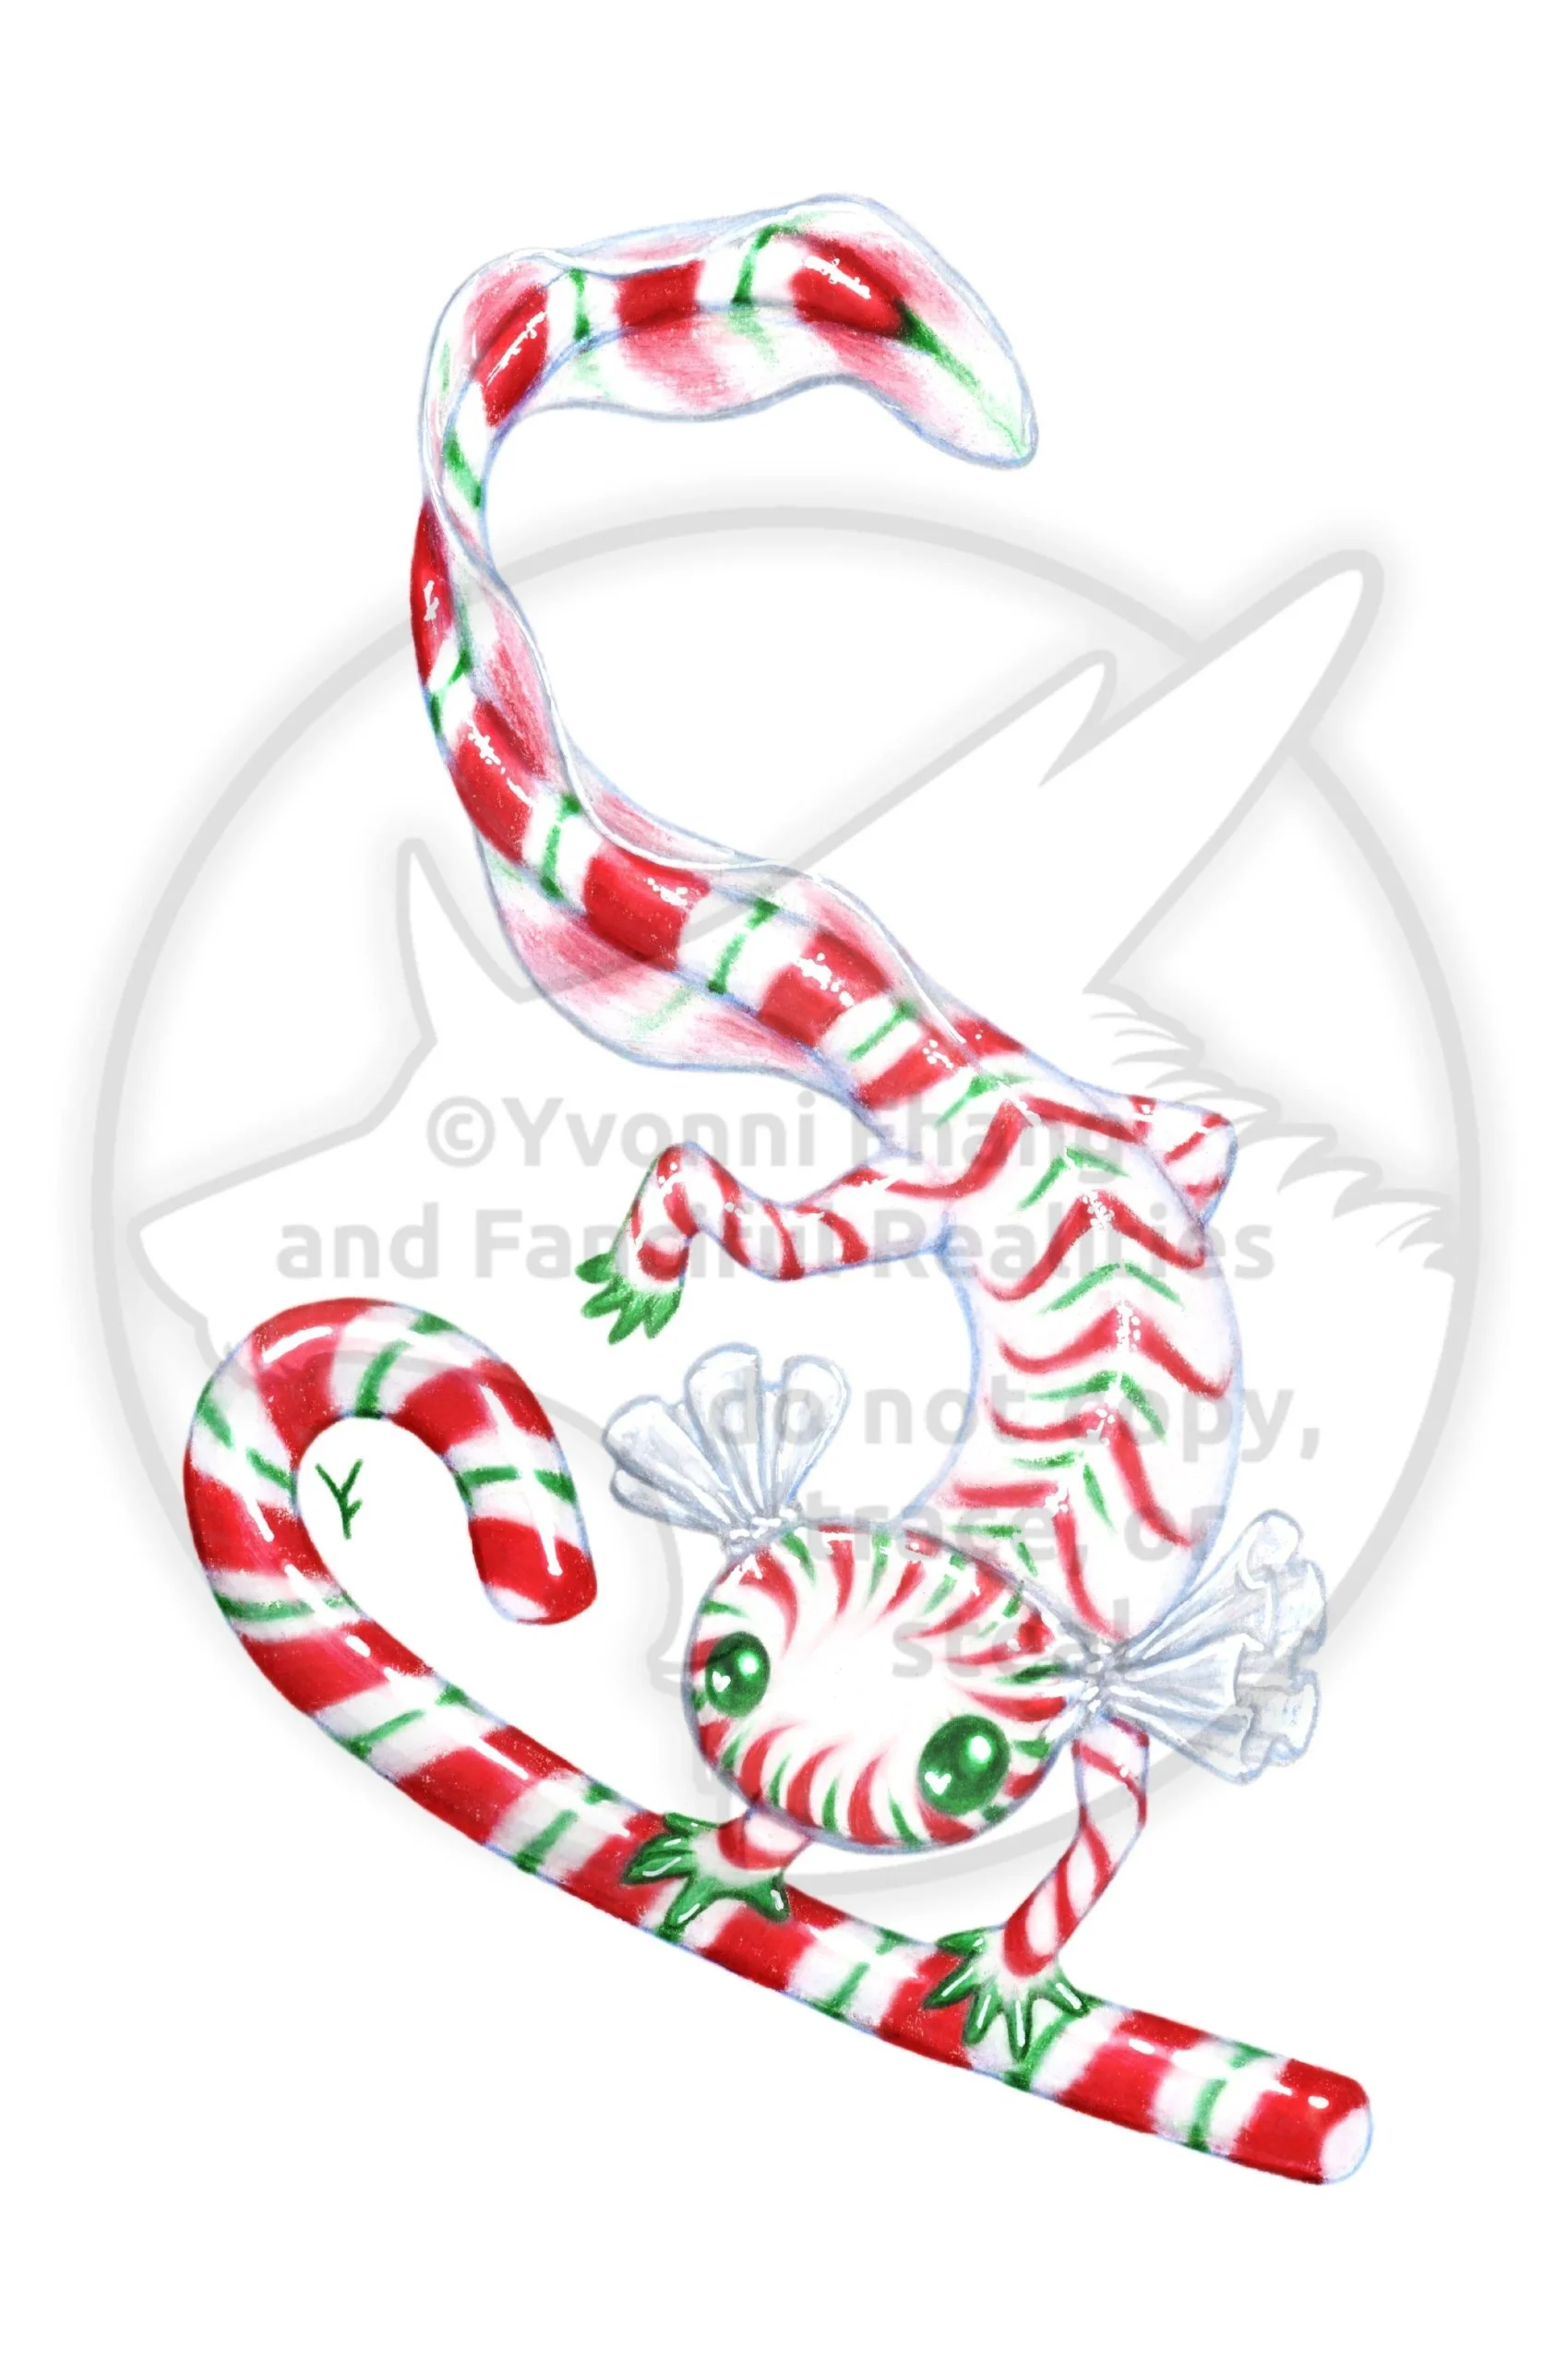 A festive peppermint candy Christmas axolotl with a candy cane!